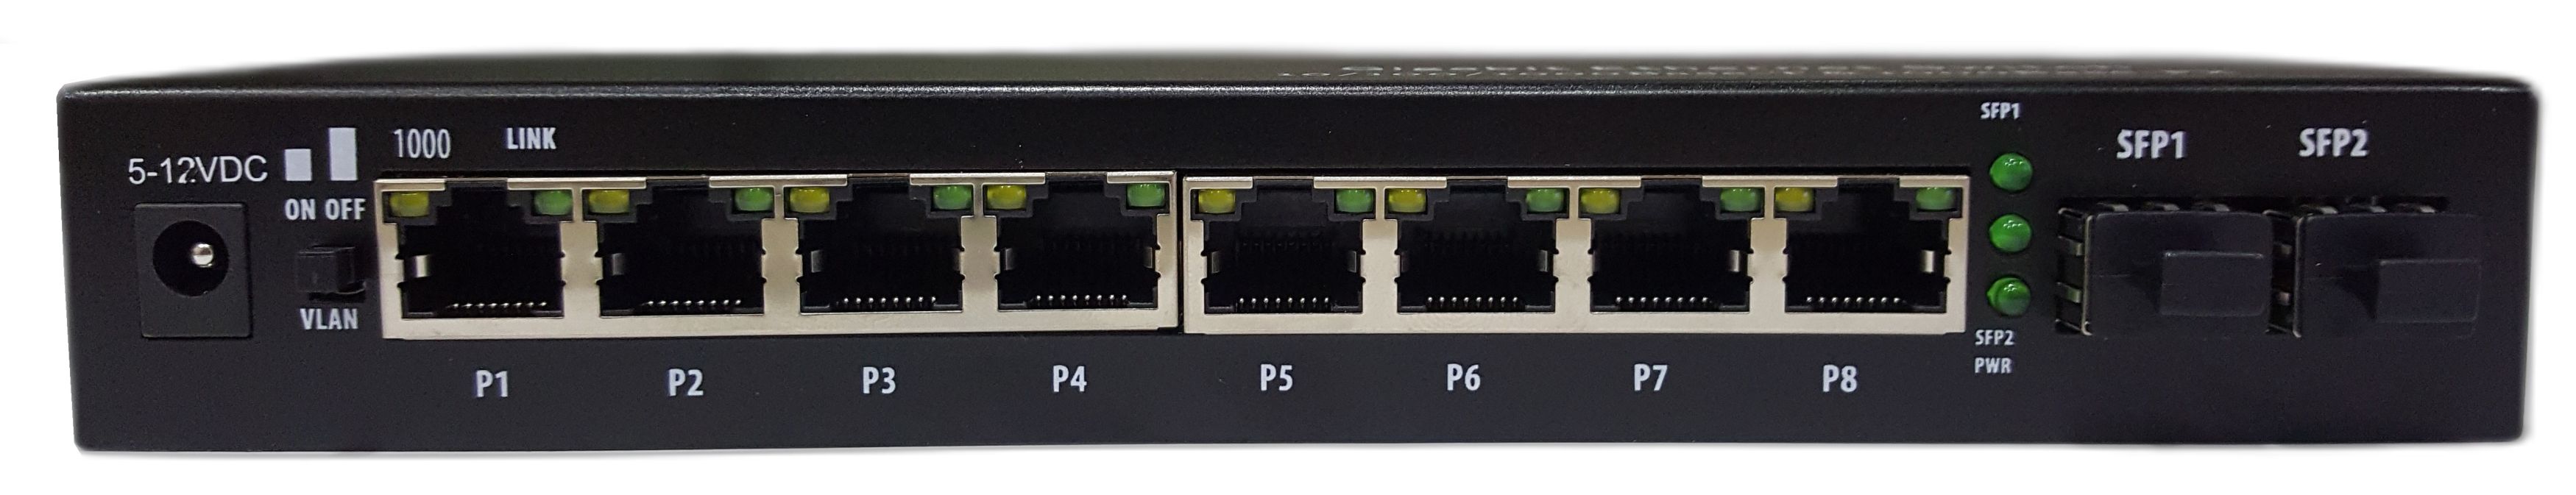 CLR-SWG-1510C-8-port-rj45-2-sfp-ethernet-switch-1